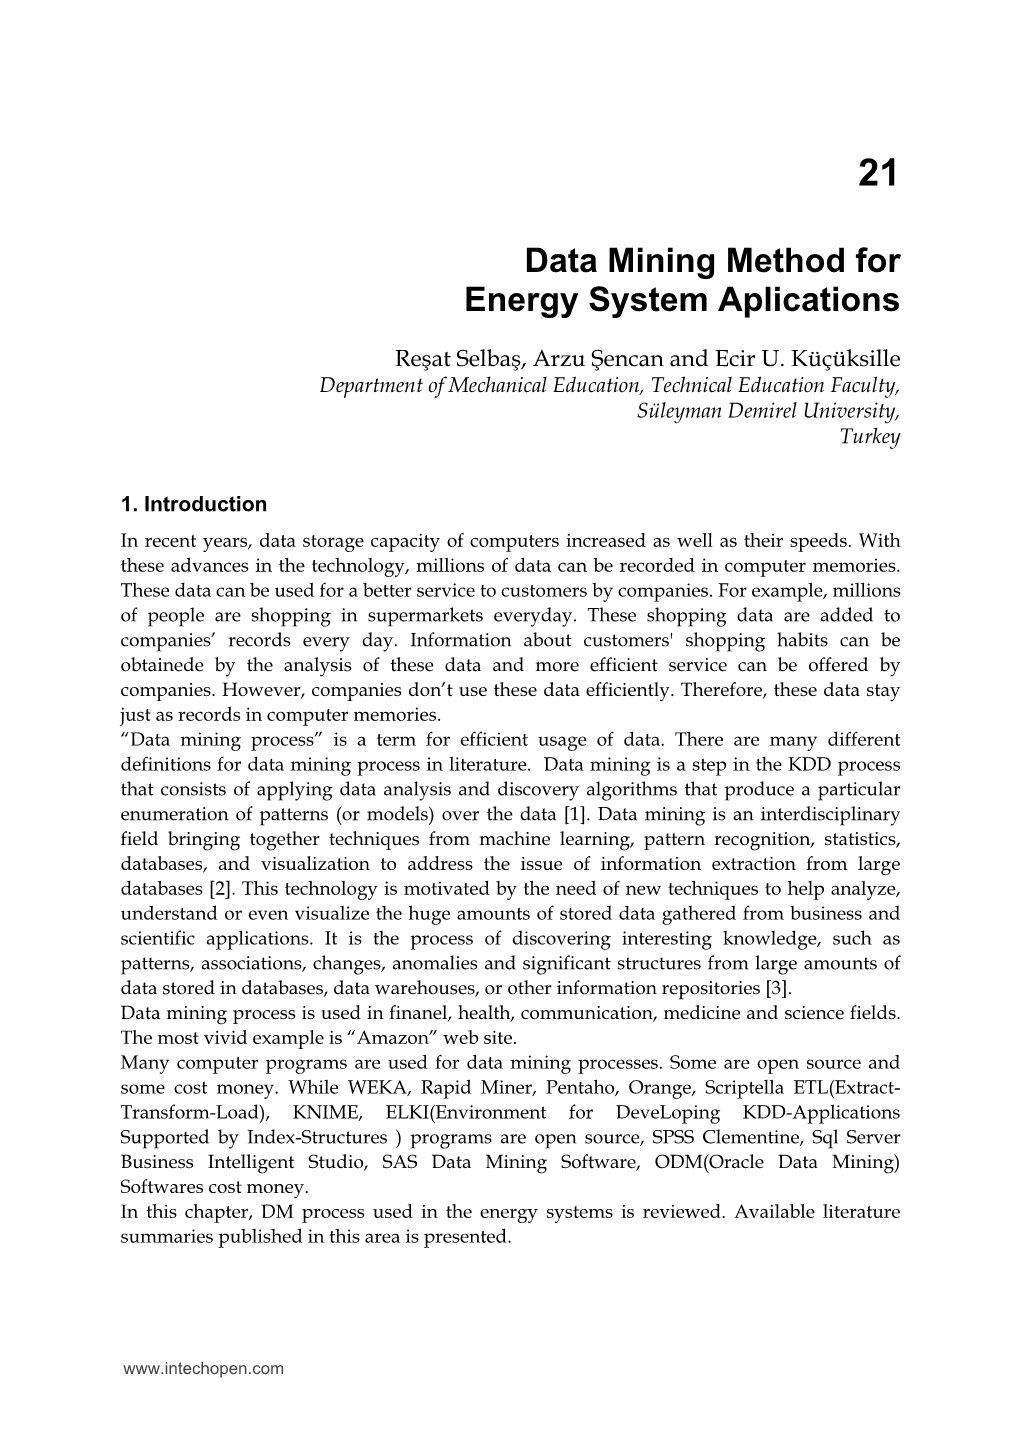 Data Mining Method for Energy System Aplications